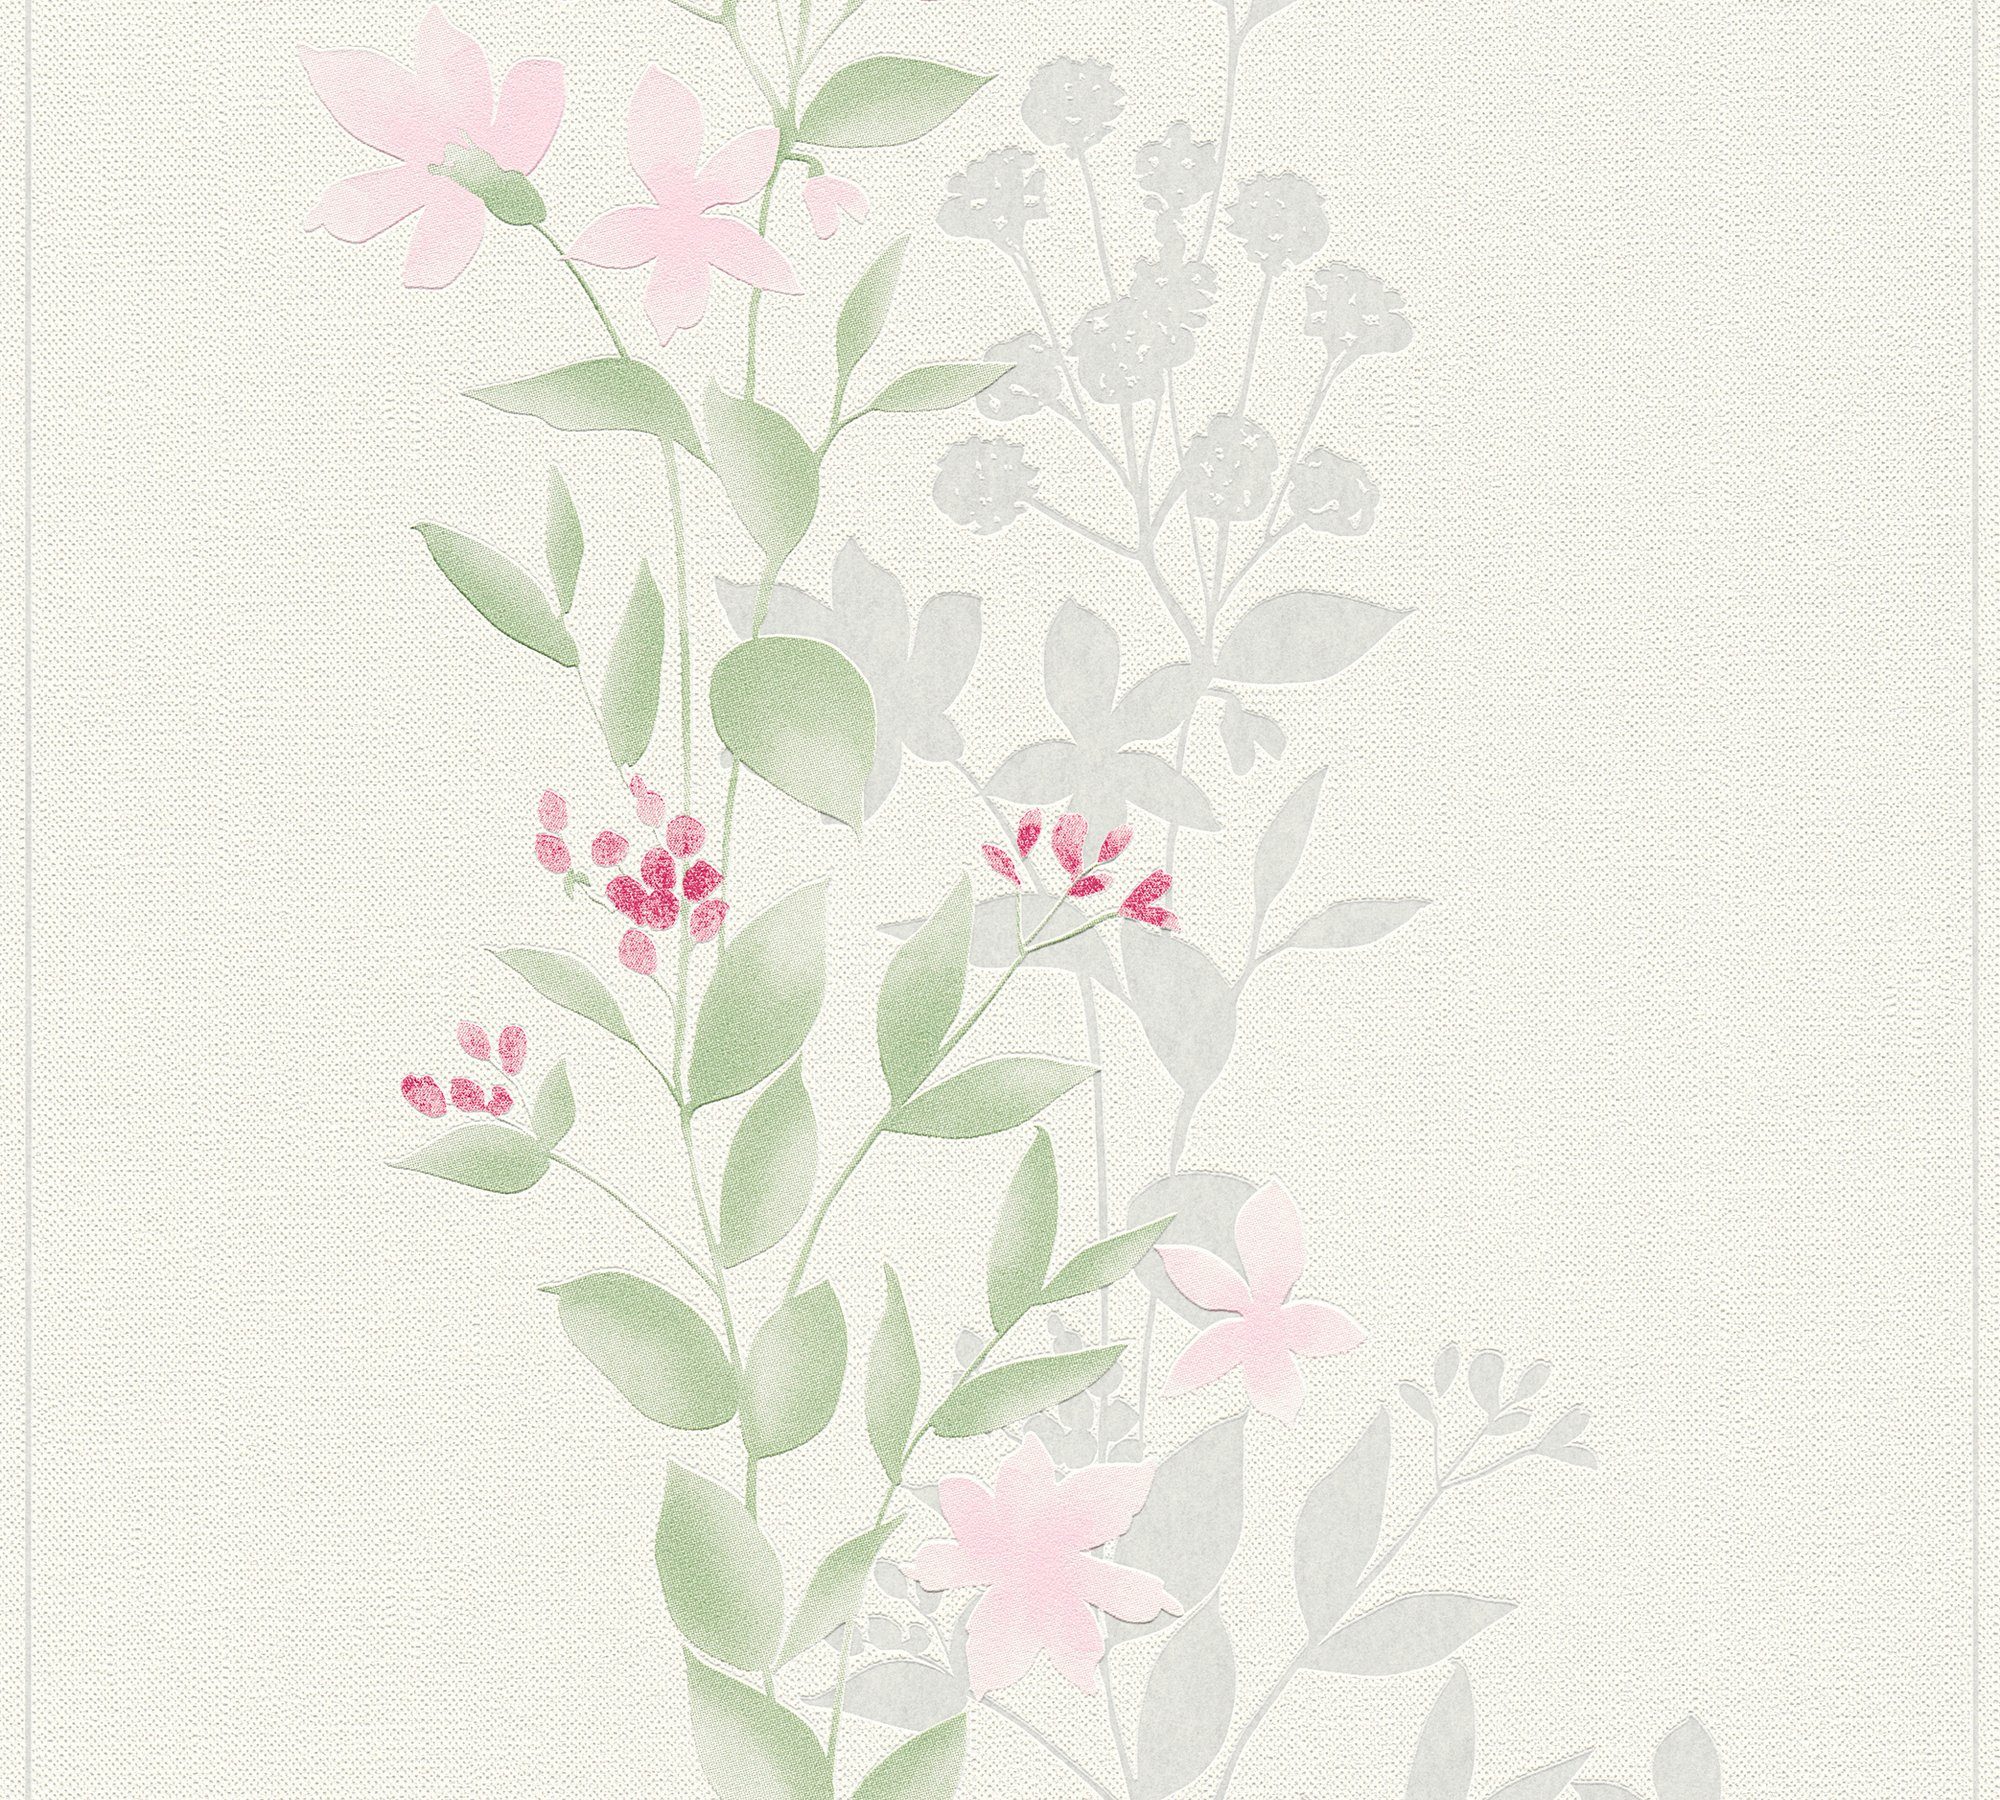 A.S. Tapete strukturiert, Blooming Blumen Vliestapete Création floral, bunt/grau/grün floral,